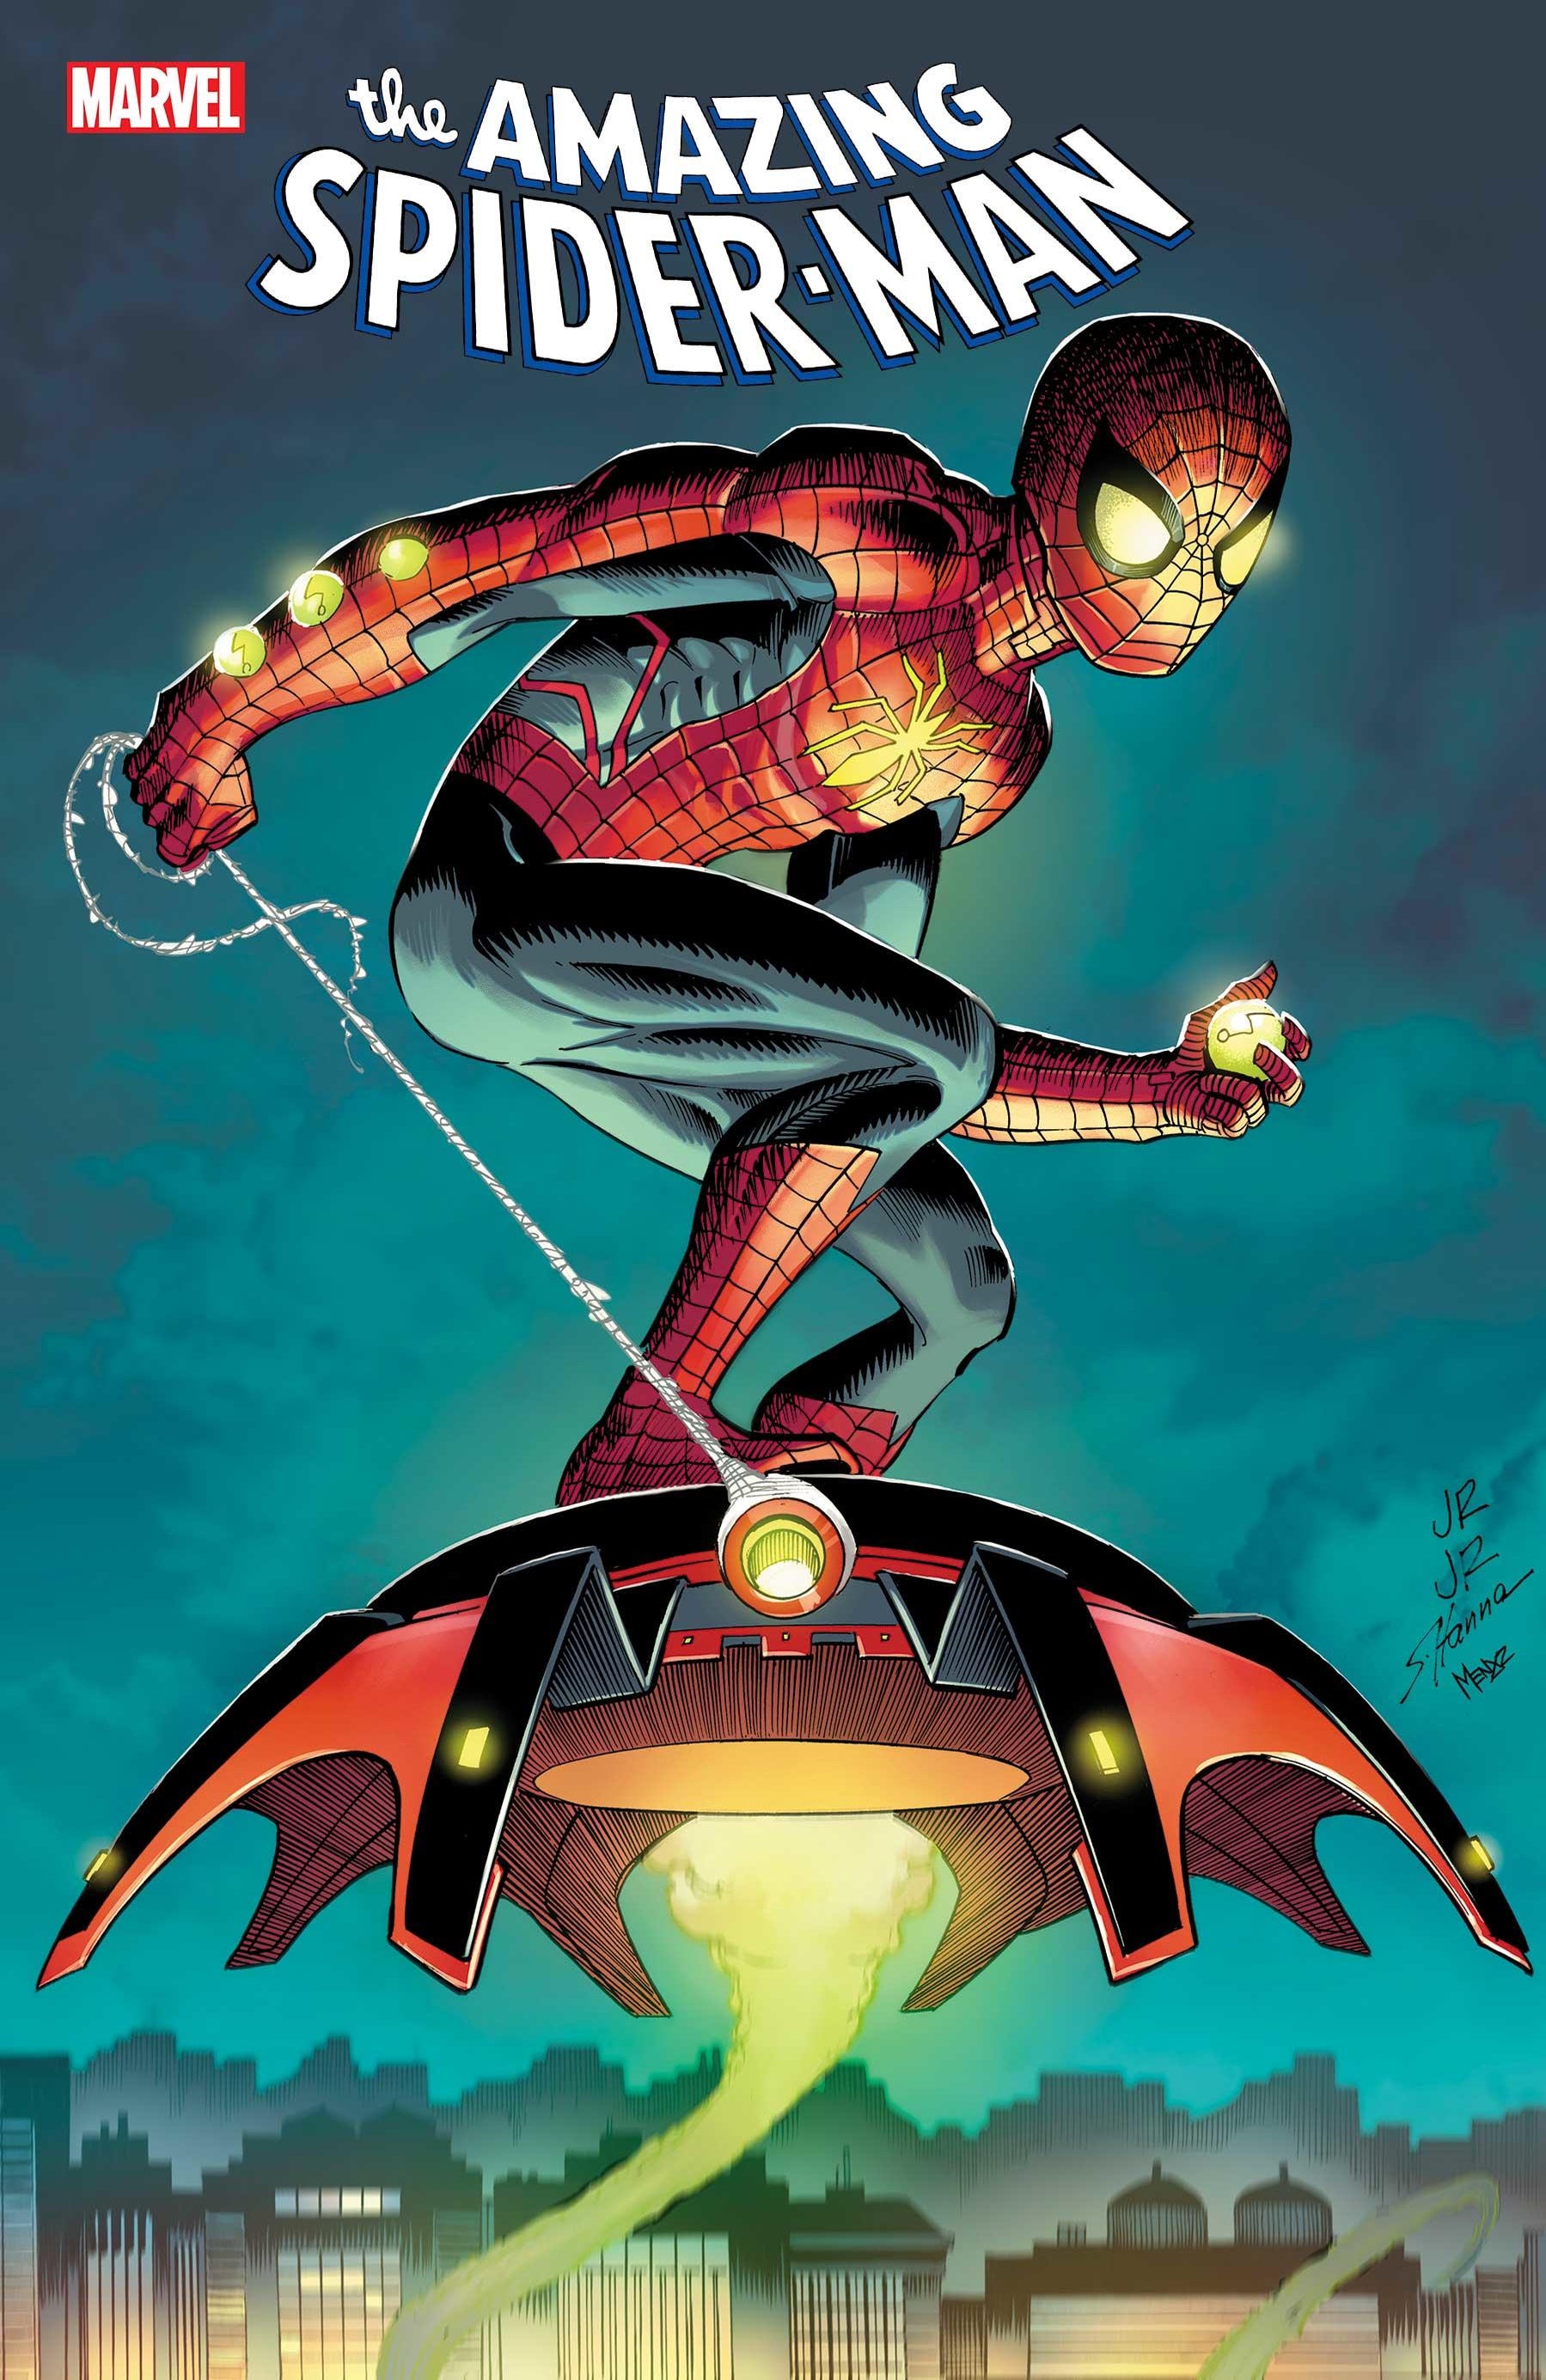 Marvel Reveals New Spider-Man Costume, Norman Osborn's Return